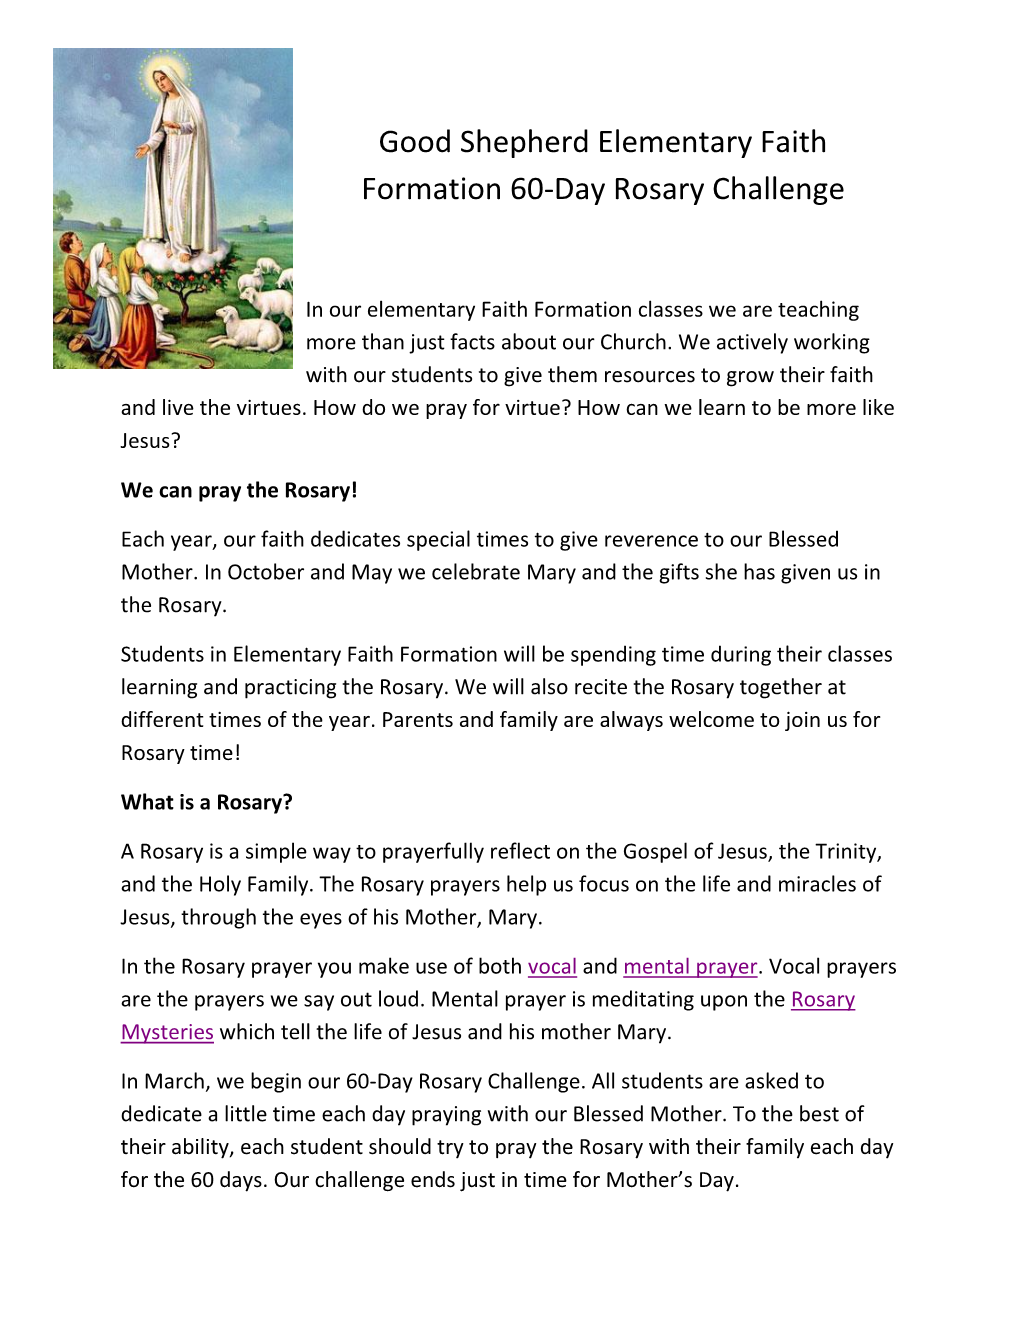 Good Shepherd Elementary Faith Formation 60-Day Rosary Challenge